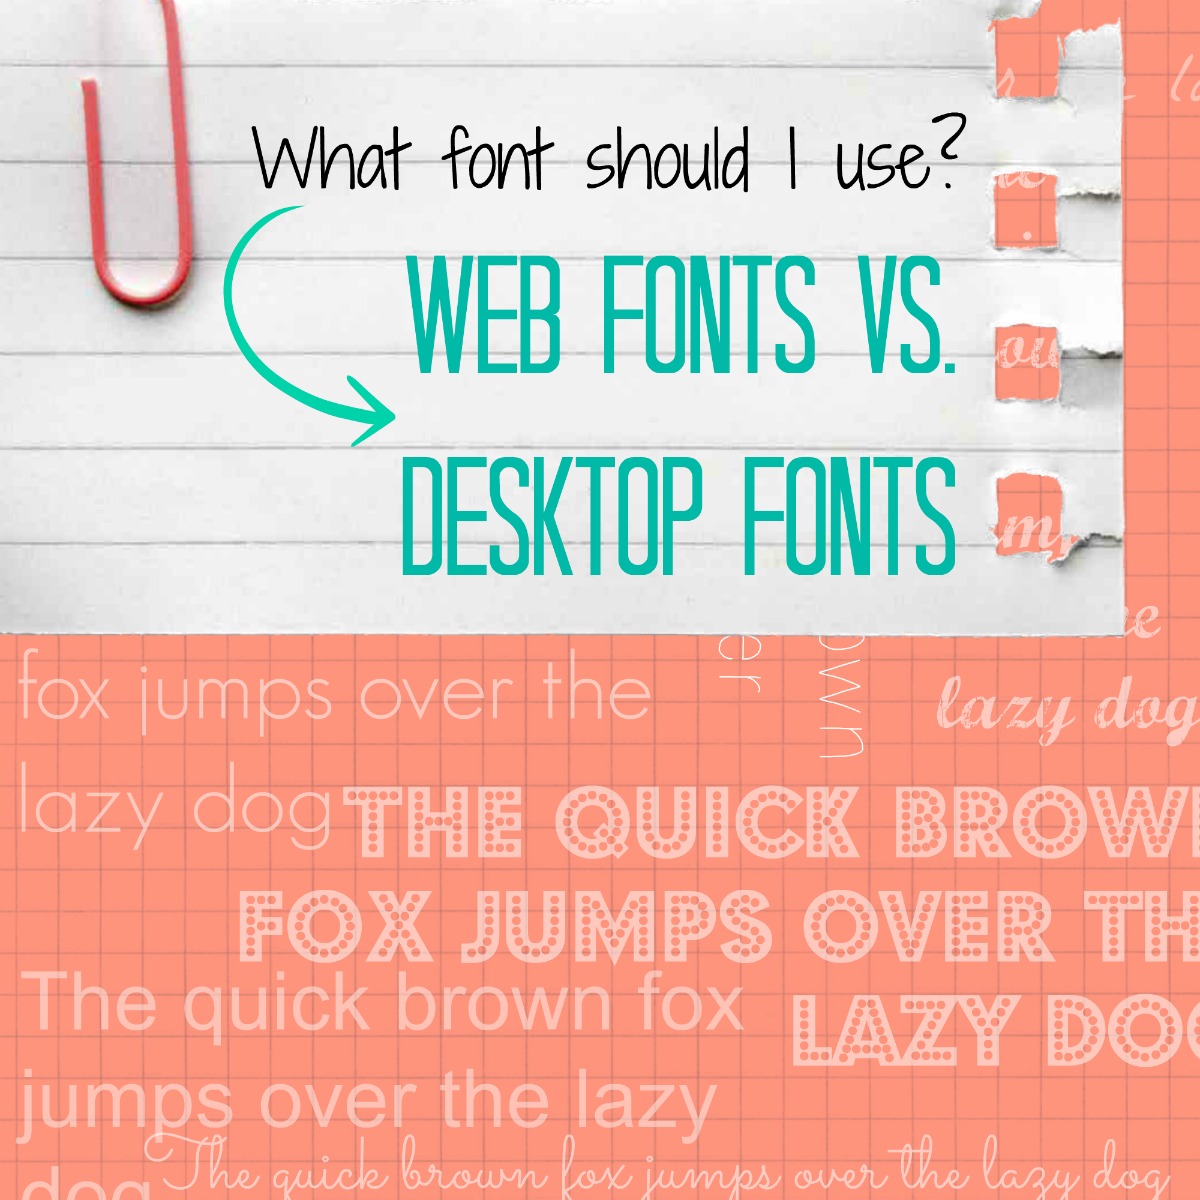 web font vs desktop font by ePaper express.